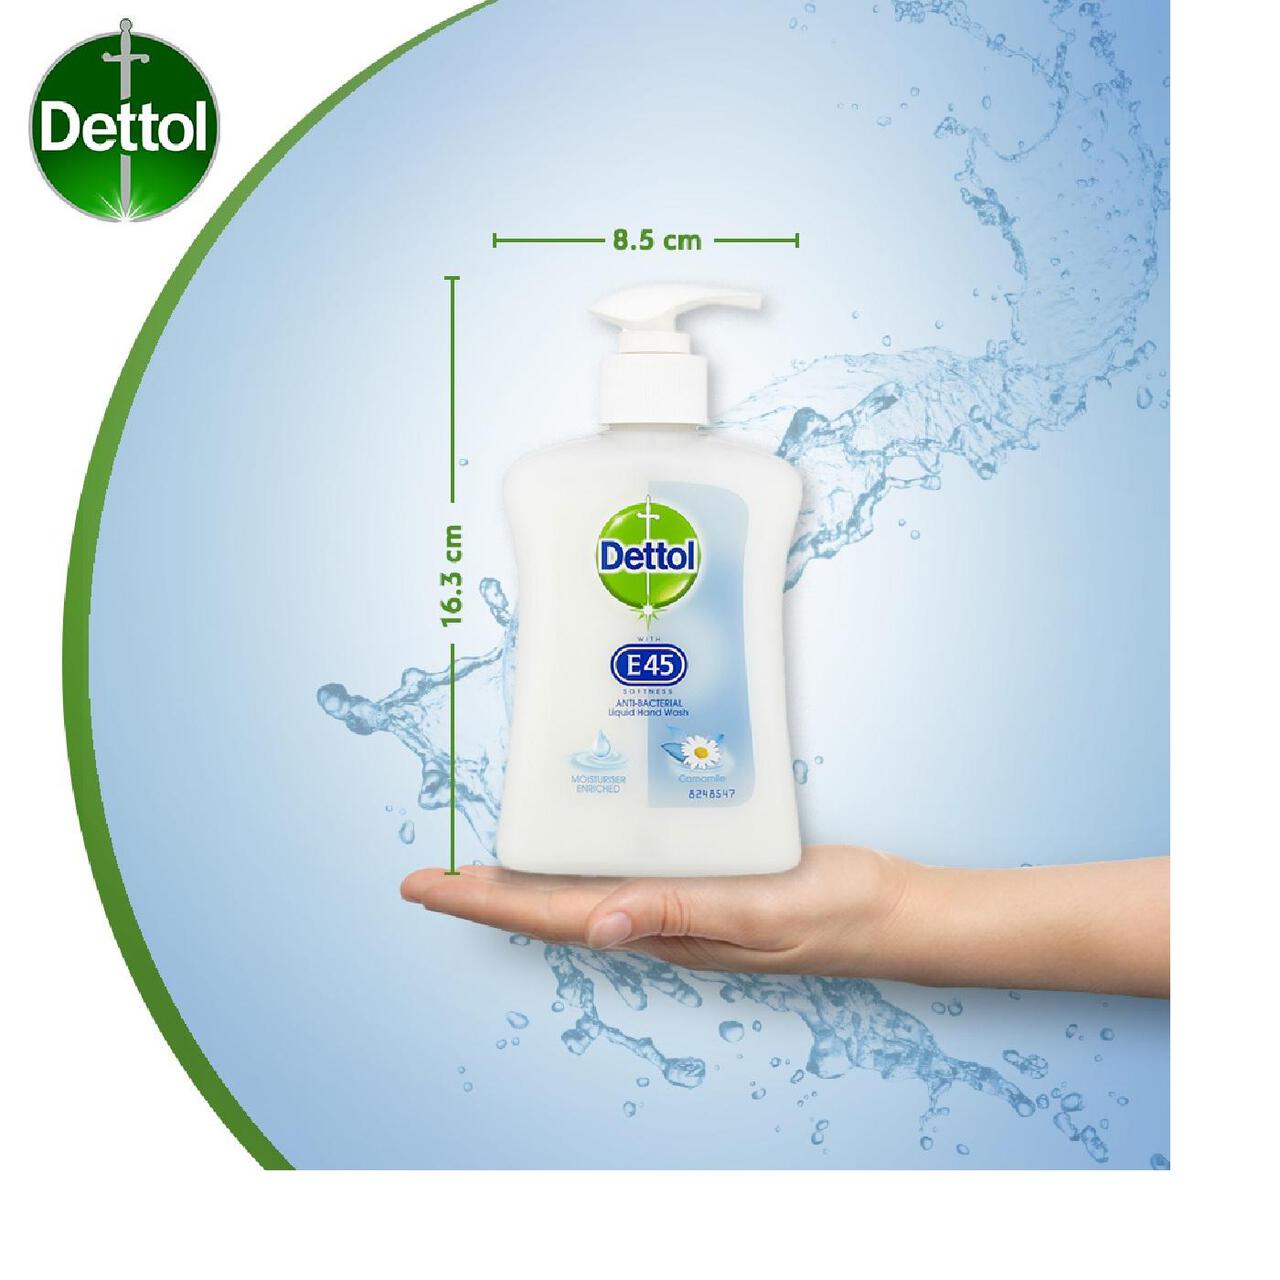 Dettol E45 Antibacterial Liquid Handwash Moisture Camomile 250ml